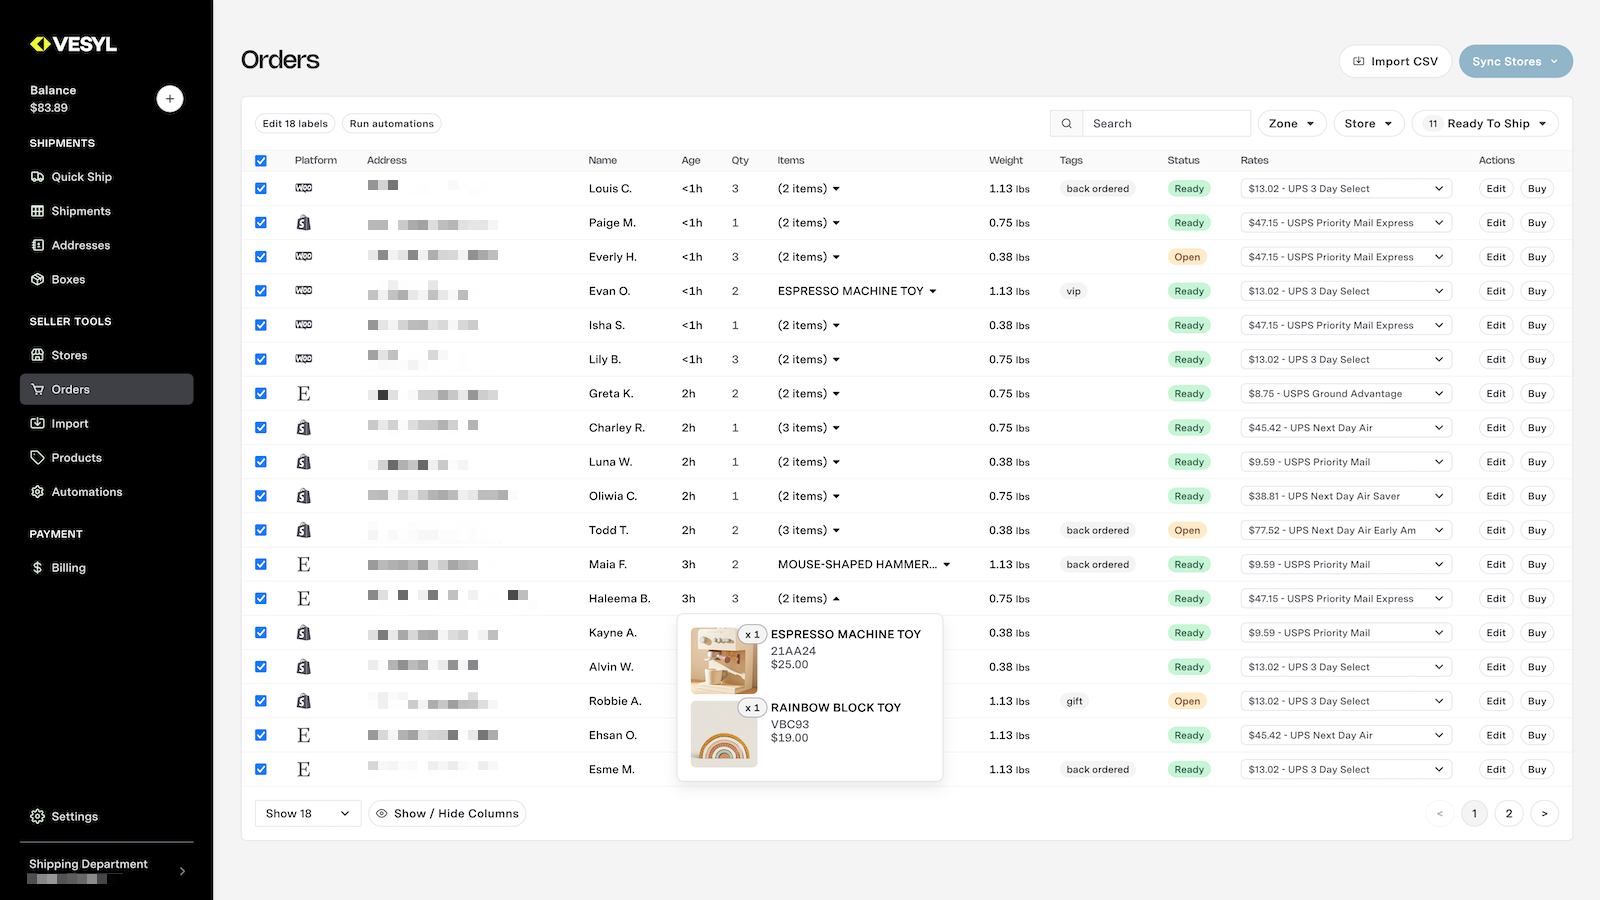 Orders screen in VESYL showing multiple Shopify orders